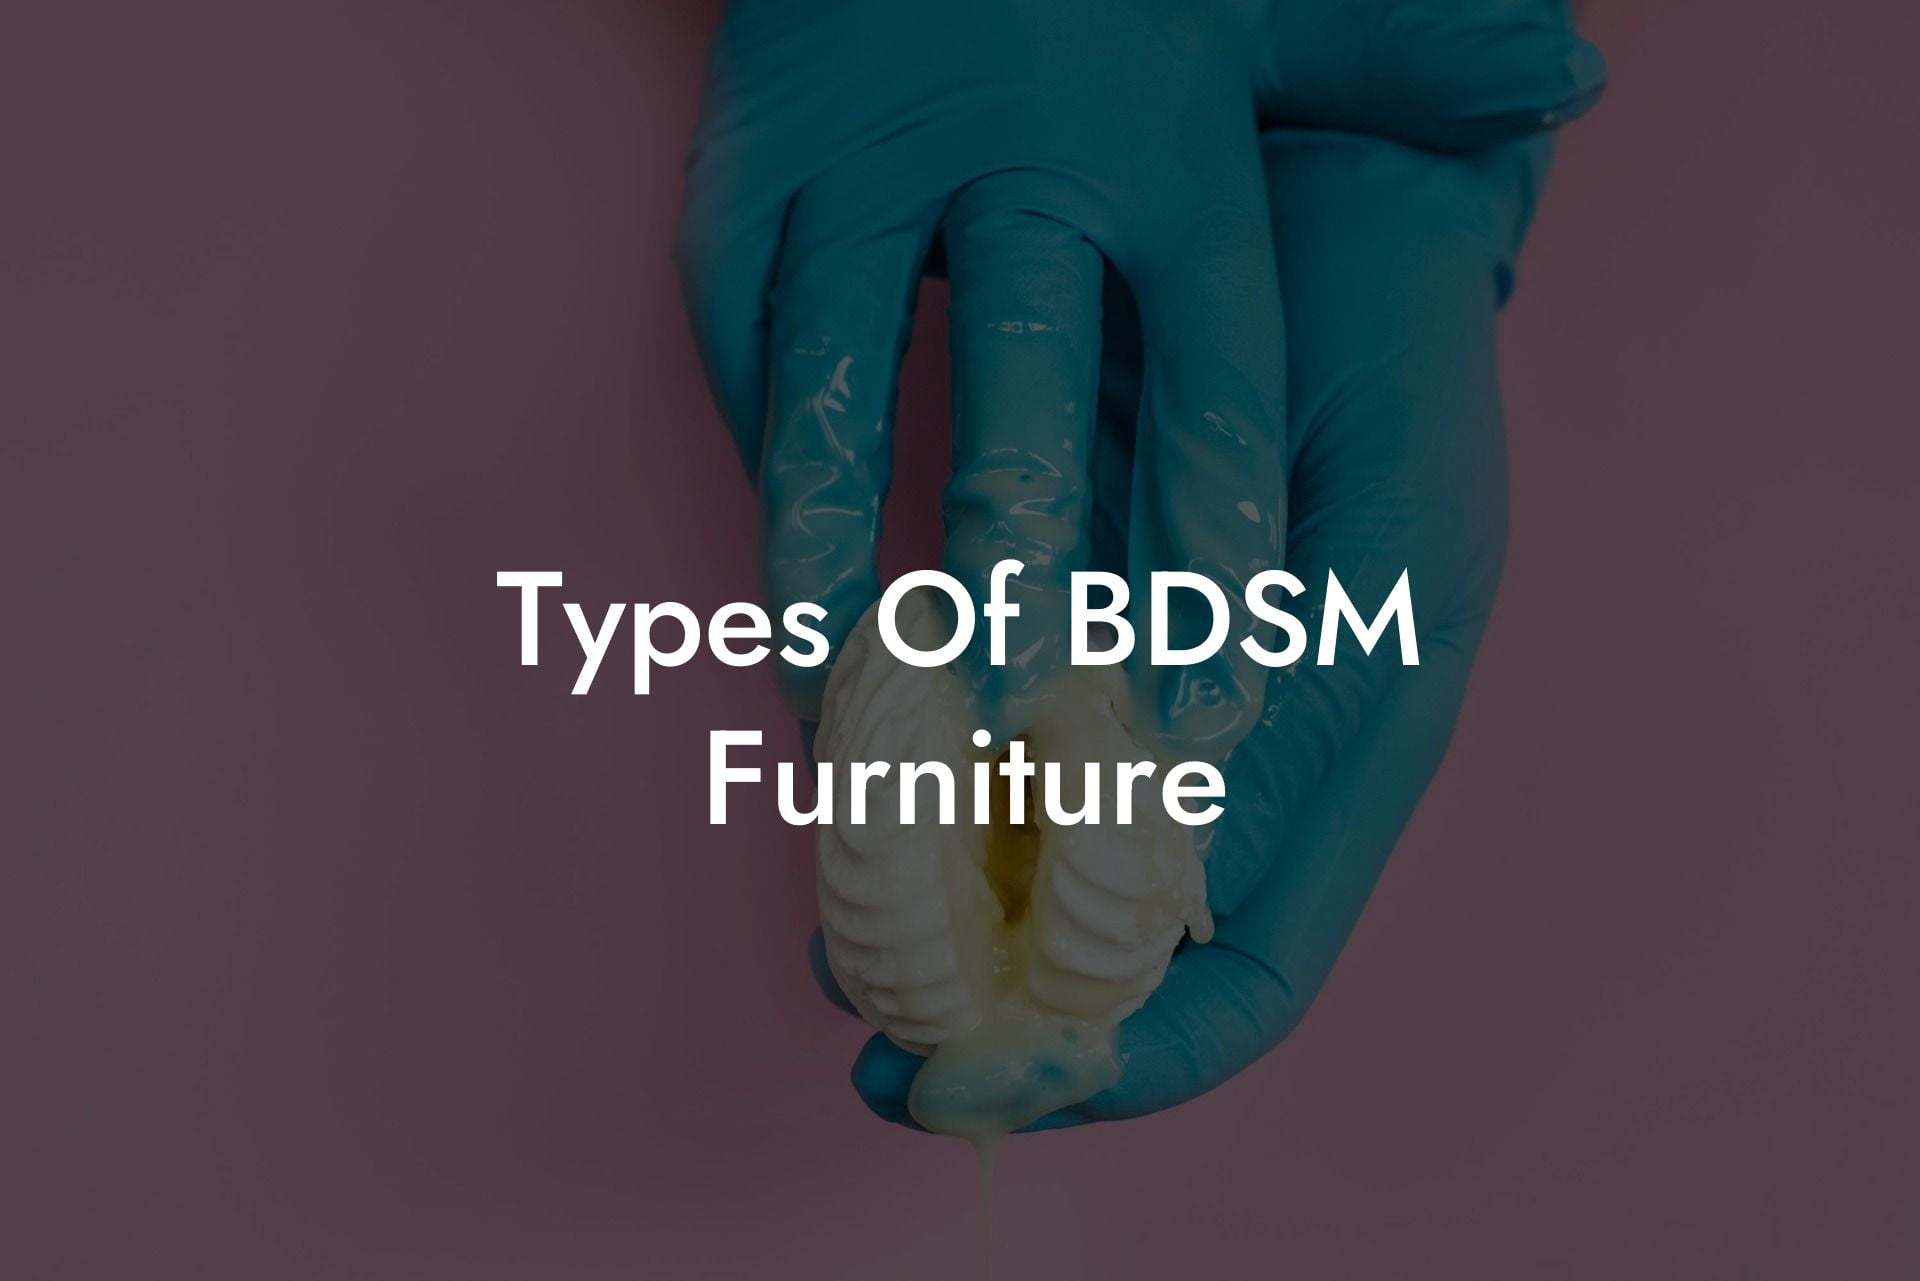 Types Of BDSM Furniture